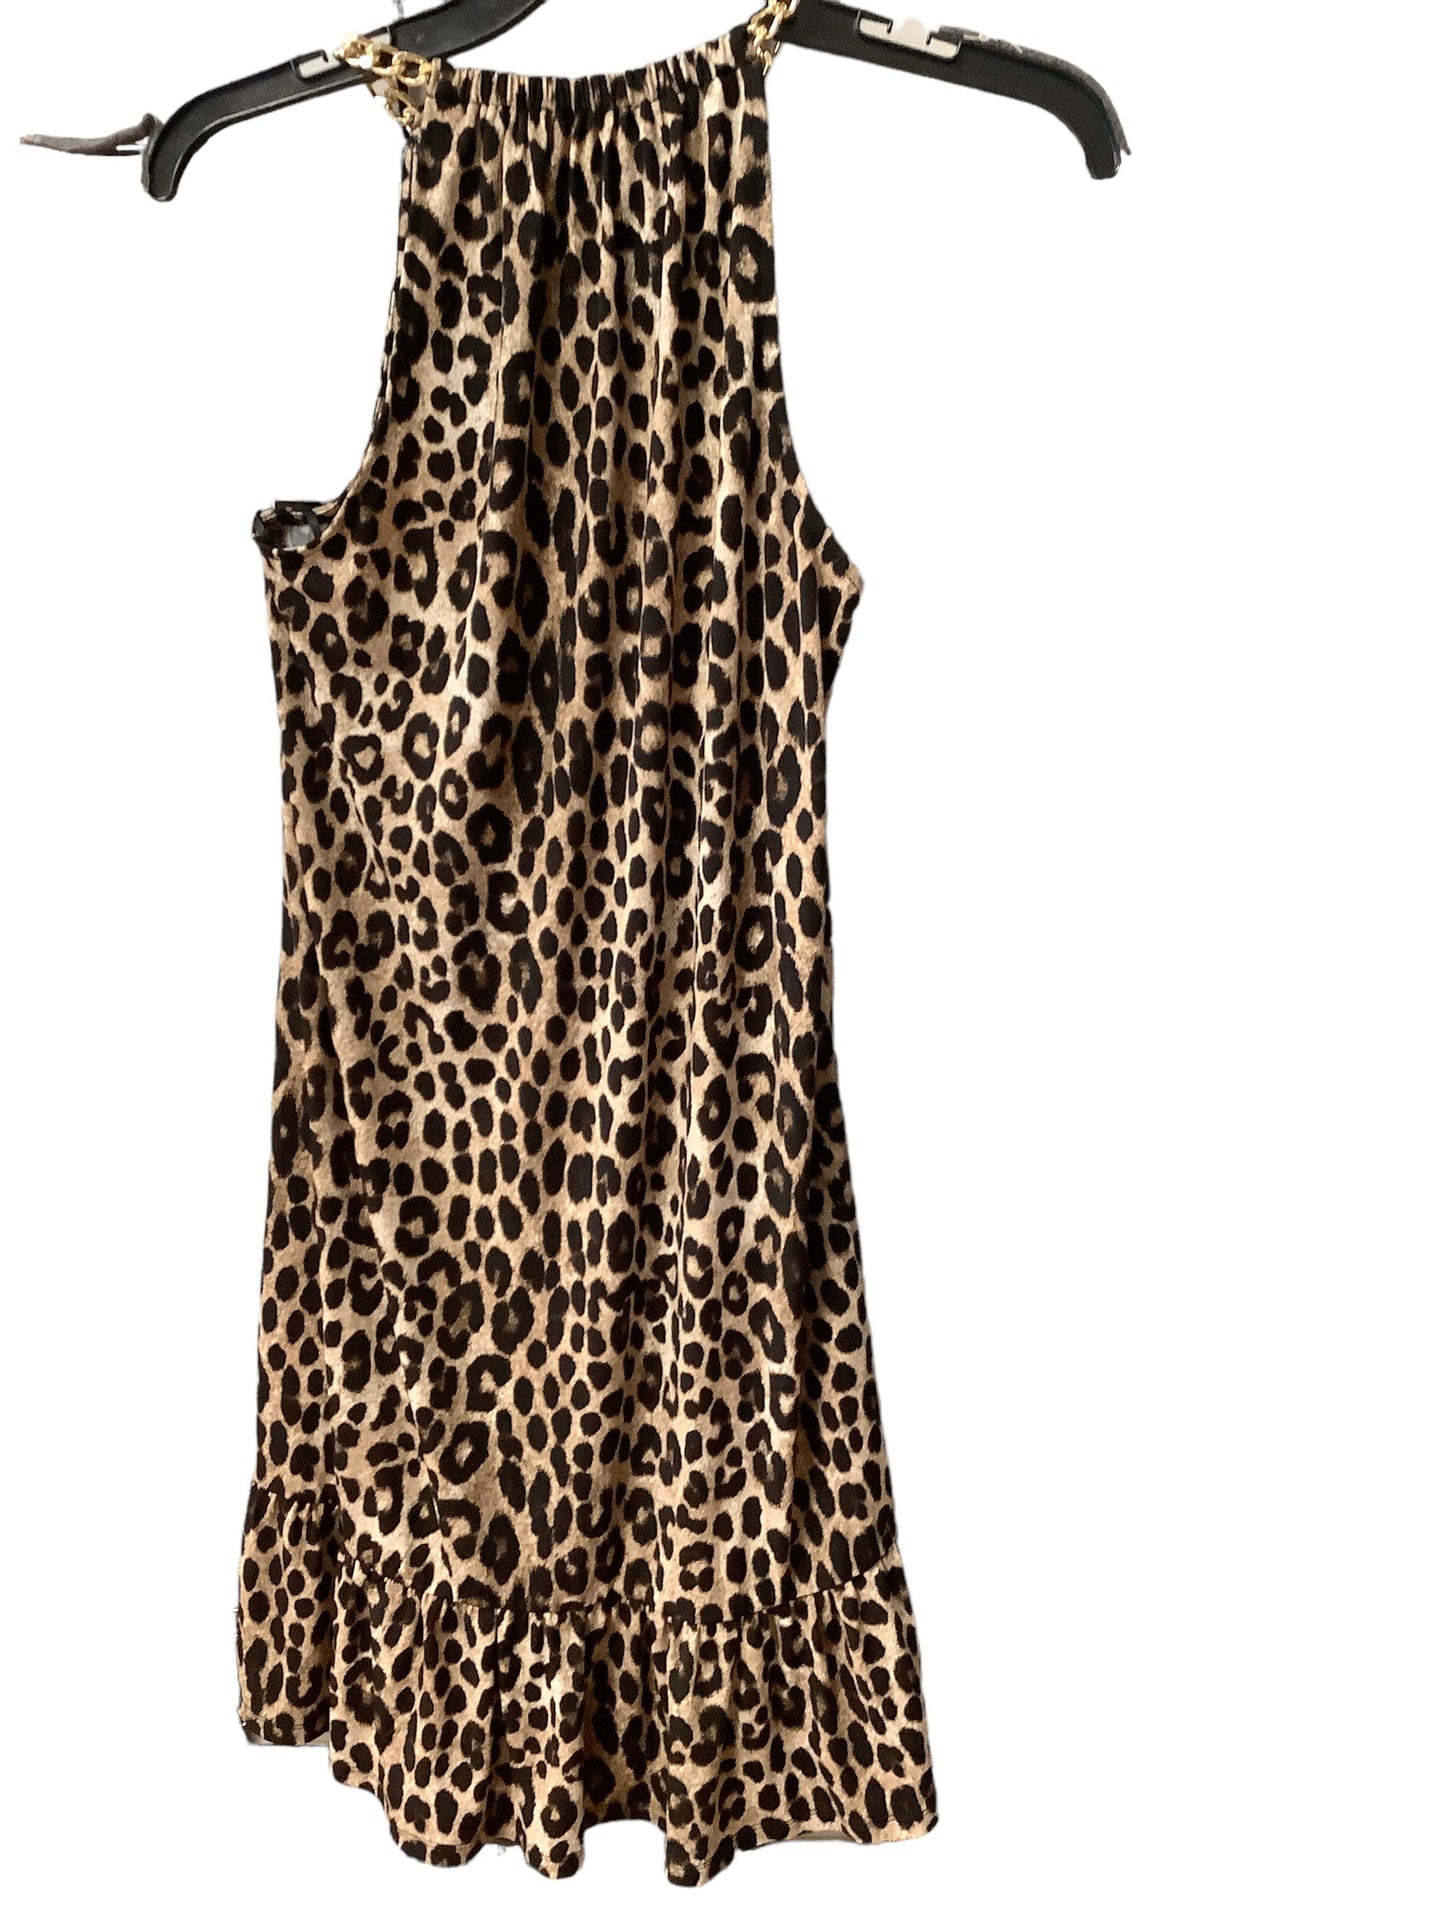 Brown Dress Designer Michael By Michael Kors, Size 6